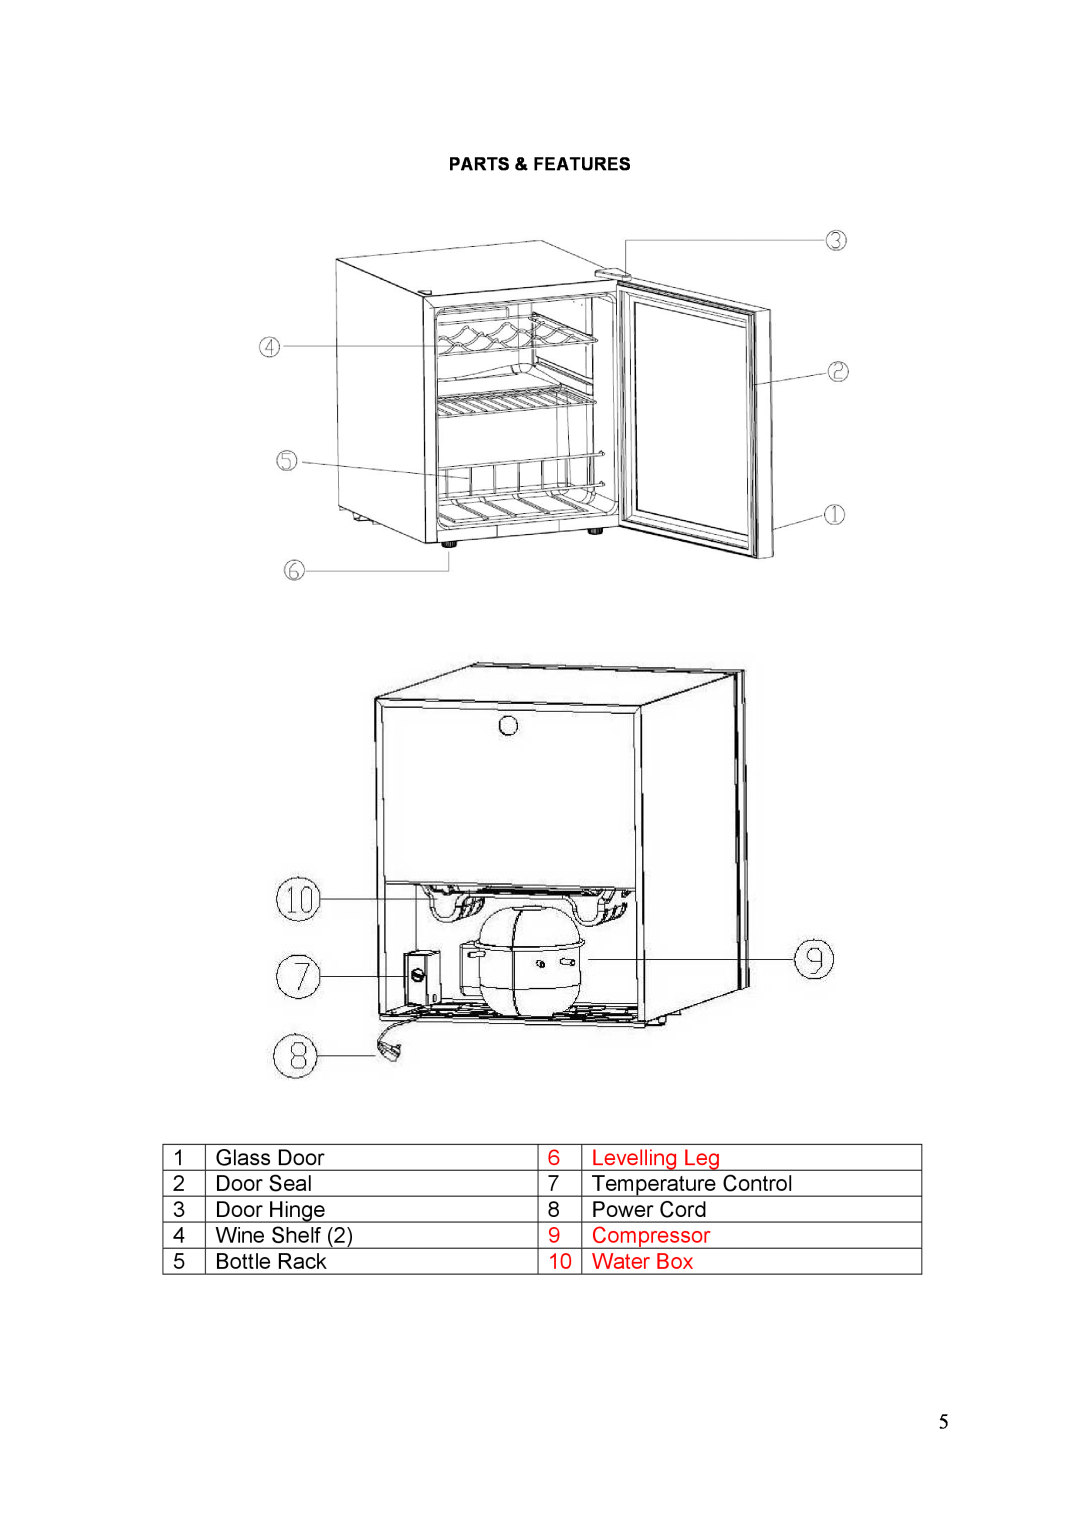 Igloo FRW154C instruction manual Glass Door, Levelling Leg, Compressor, Water Box 